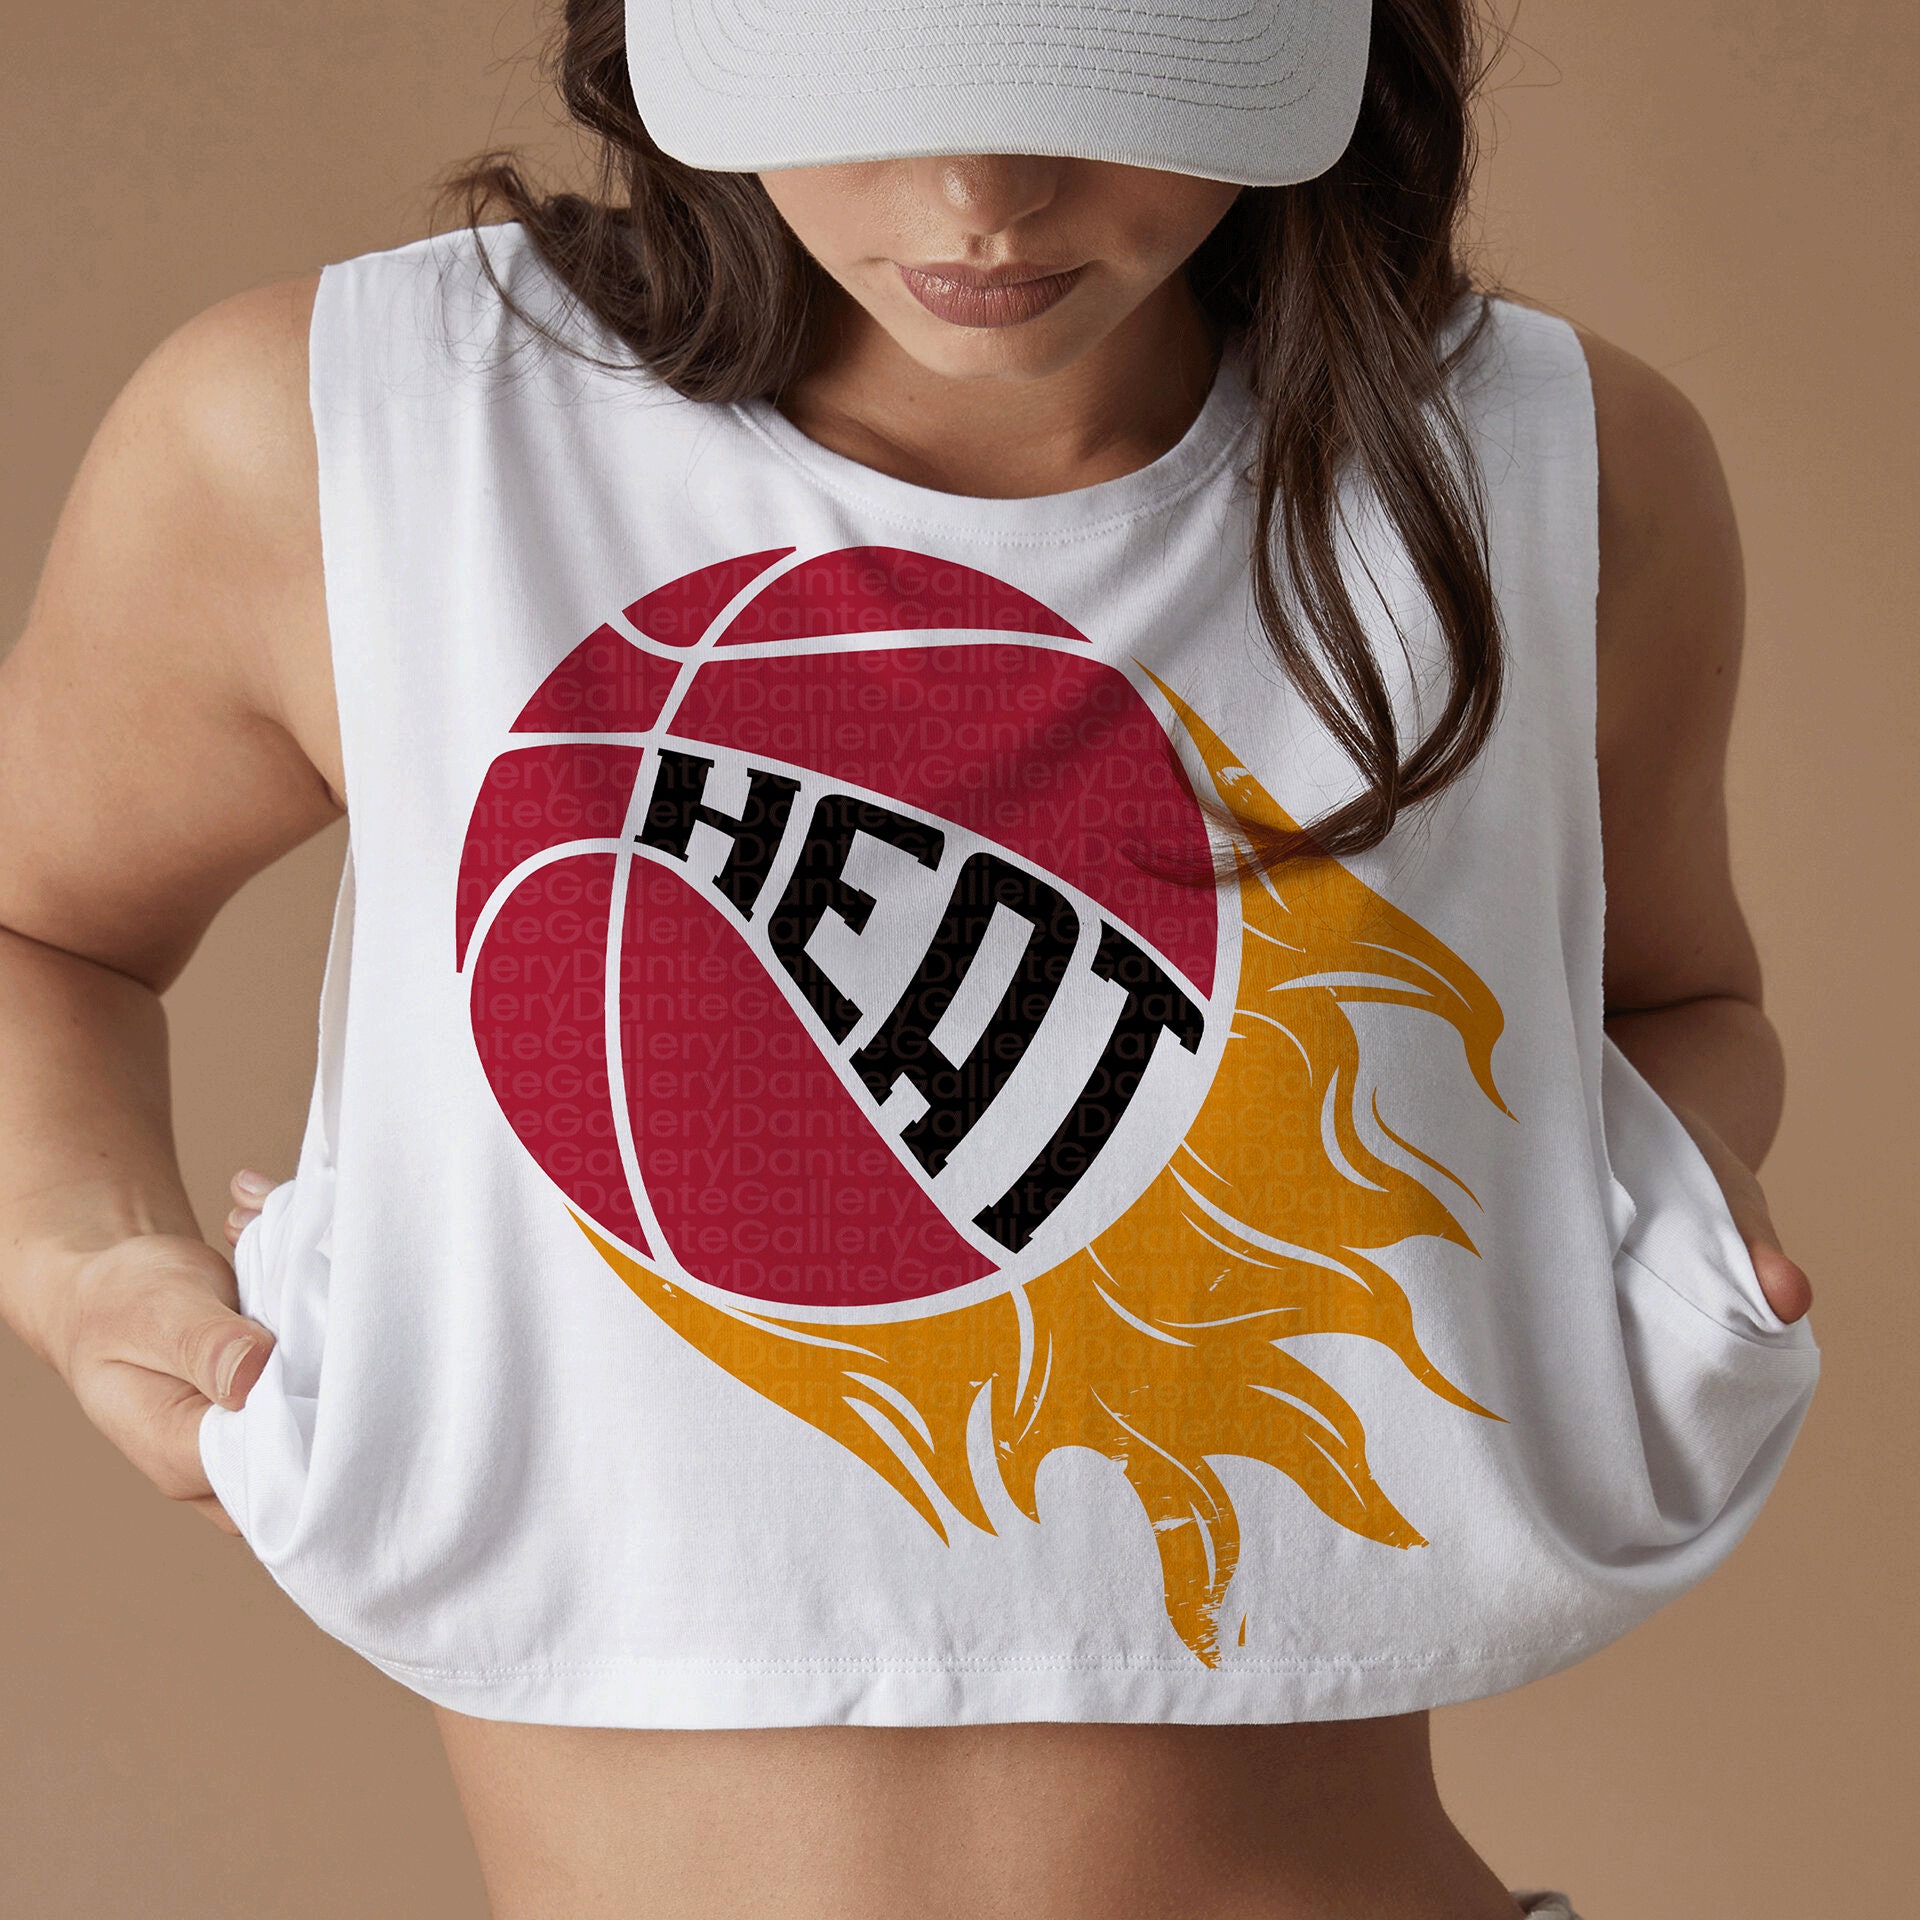 Vintage Miami Heat EST 1988 Logo Sweatshirt, Miami Basketball Team Shirt,  NBA Tee, World Series, Unisex T-shirt Sweater Hoodie - Bluefink